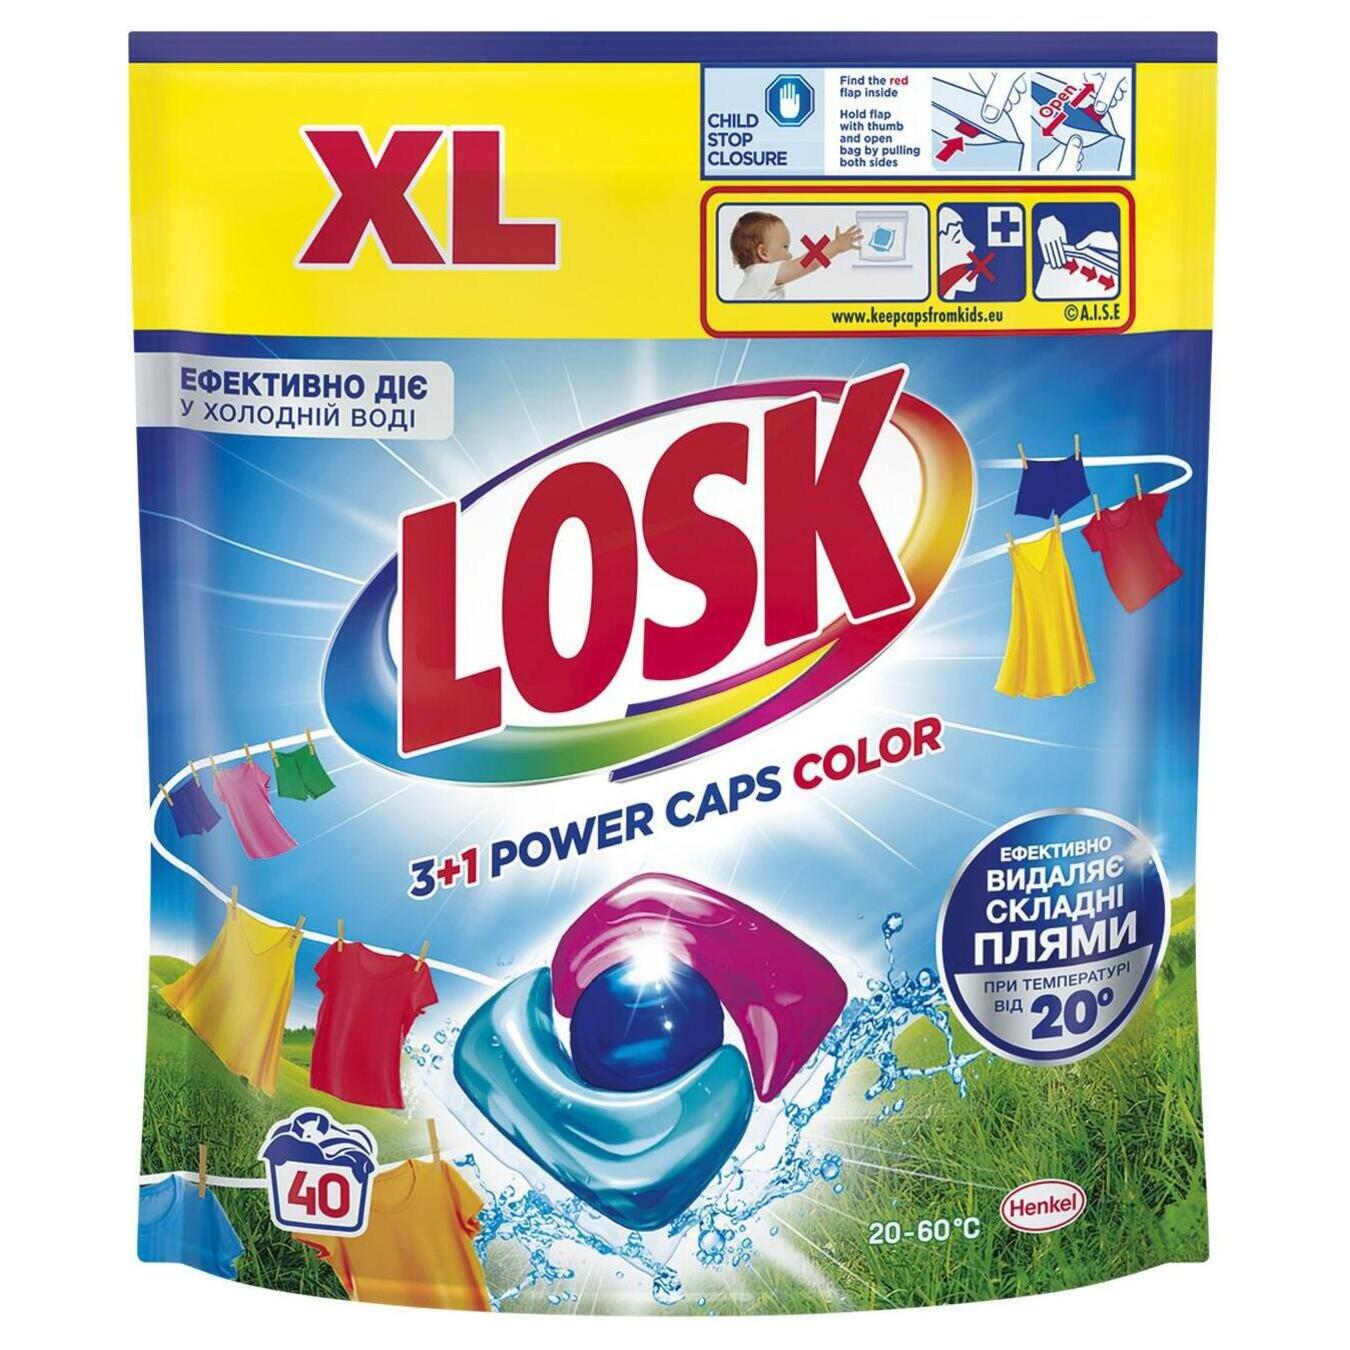 Capsules for washing Losk trio-capsules Color 40 pcs